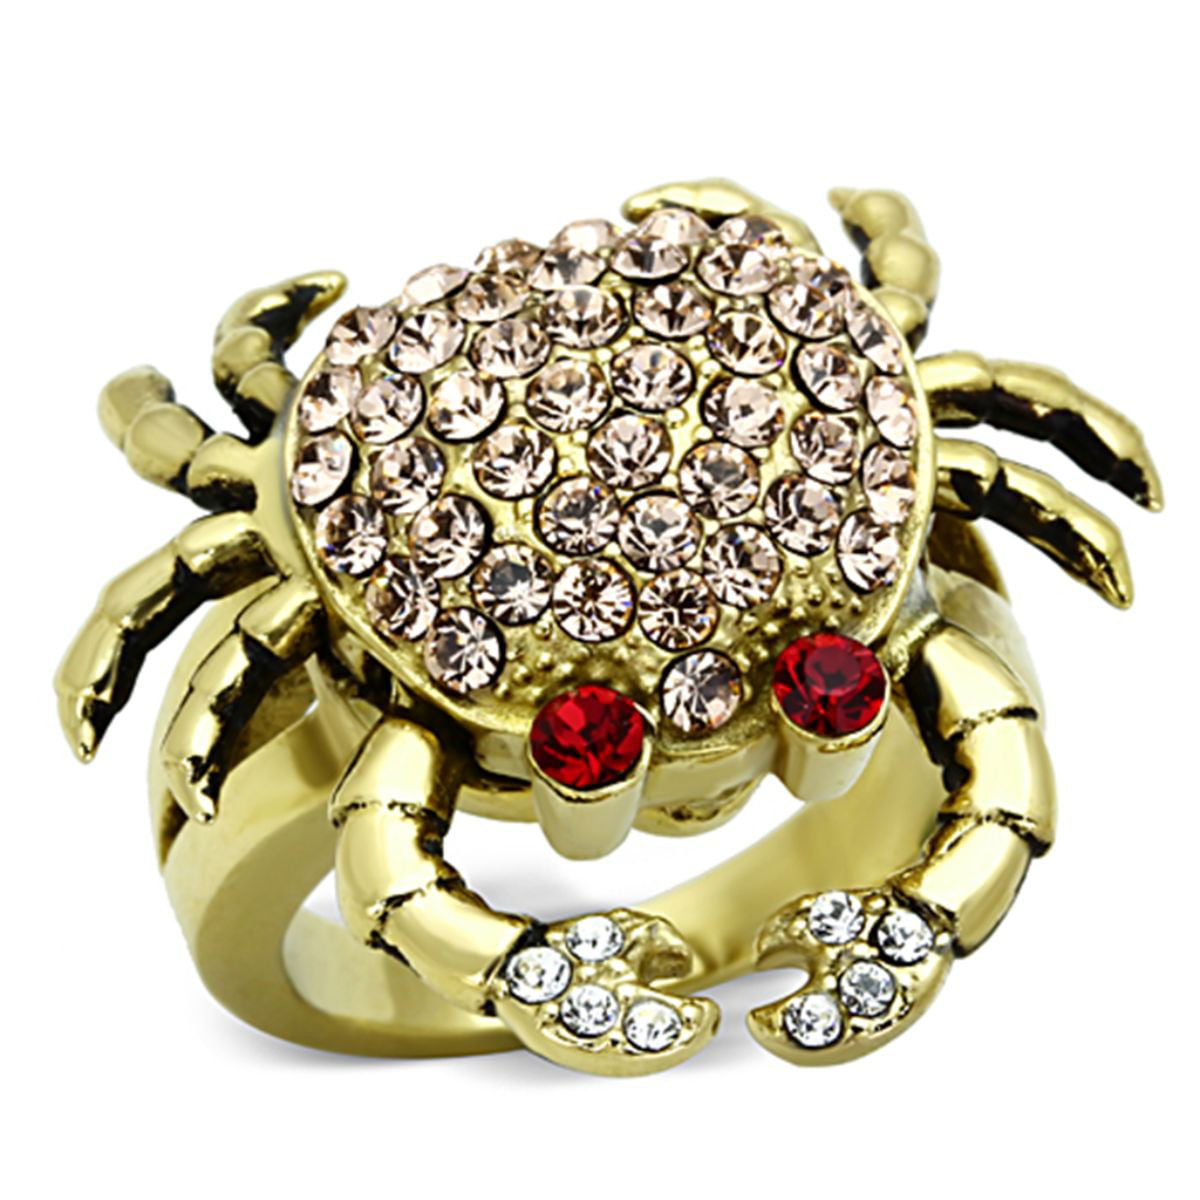 Crab Jewelry Silver And 14k Gold Handmade Crab Ring CRB1-TNR | eBay